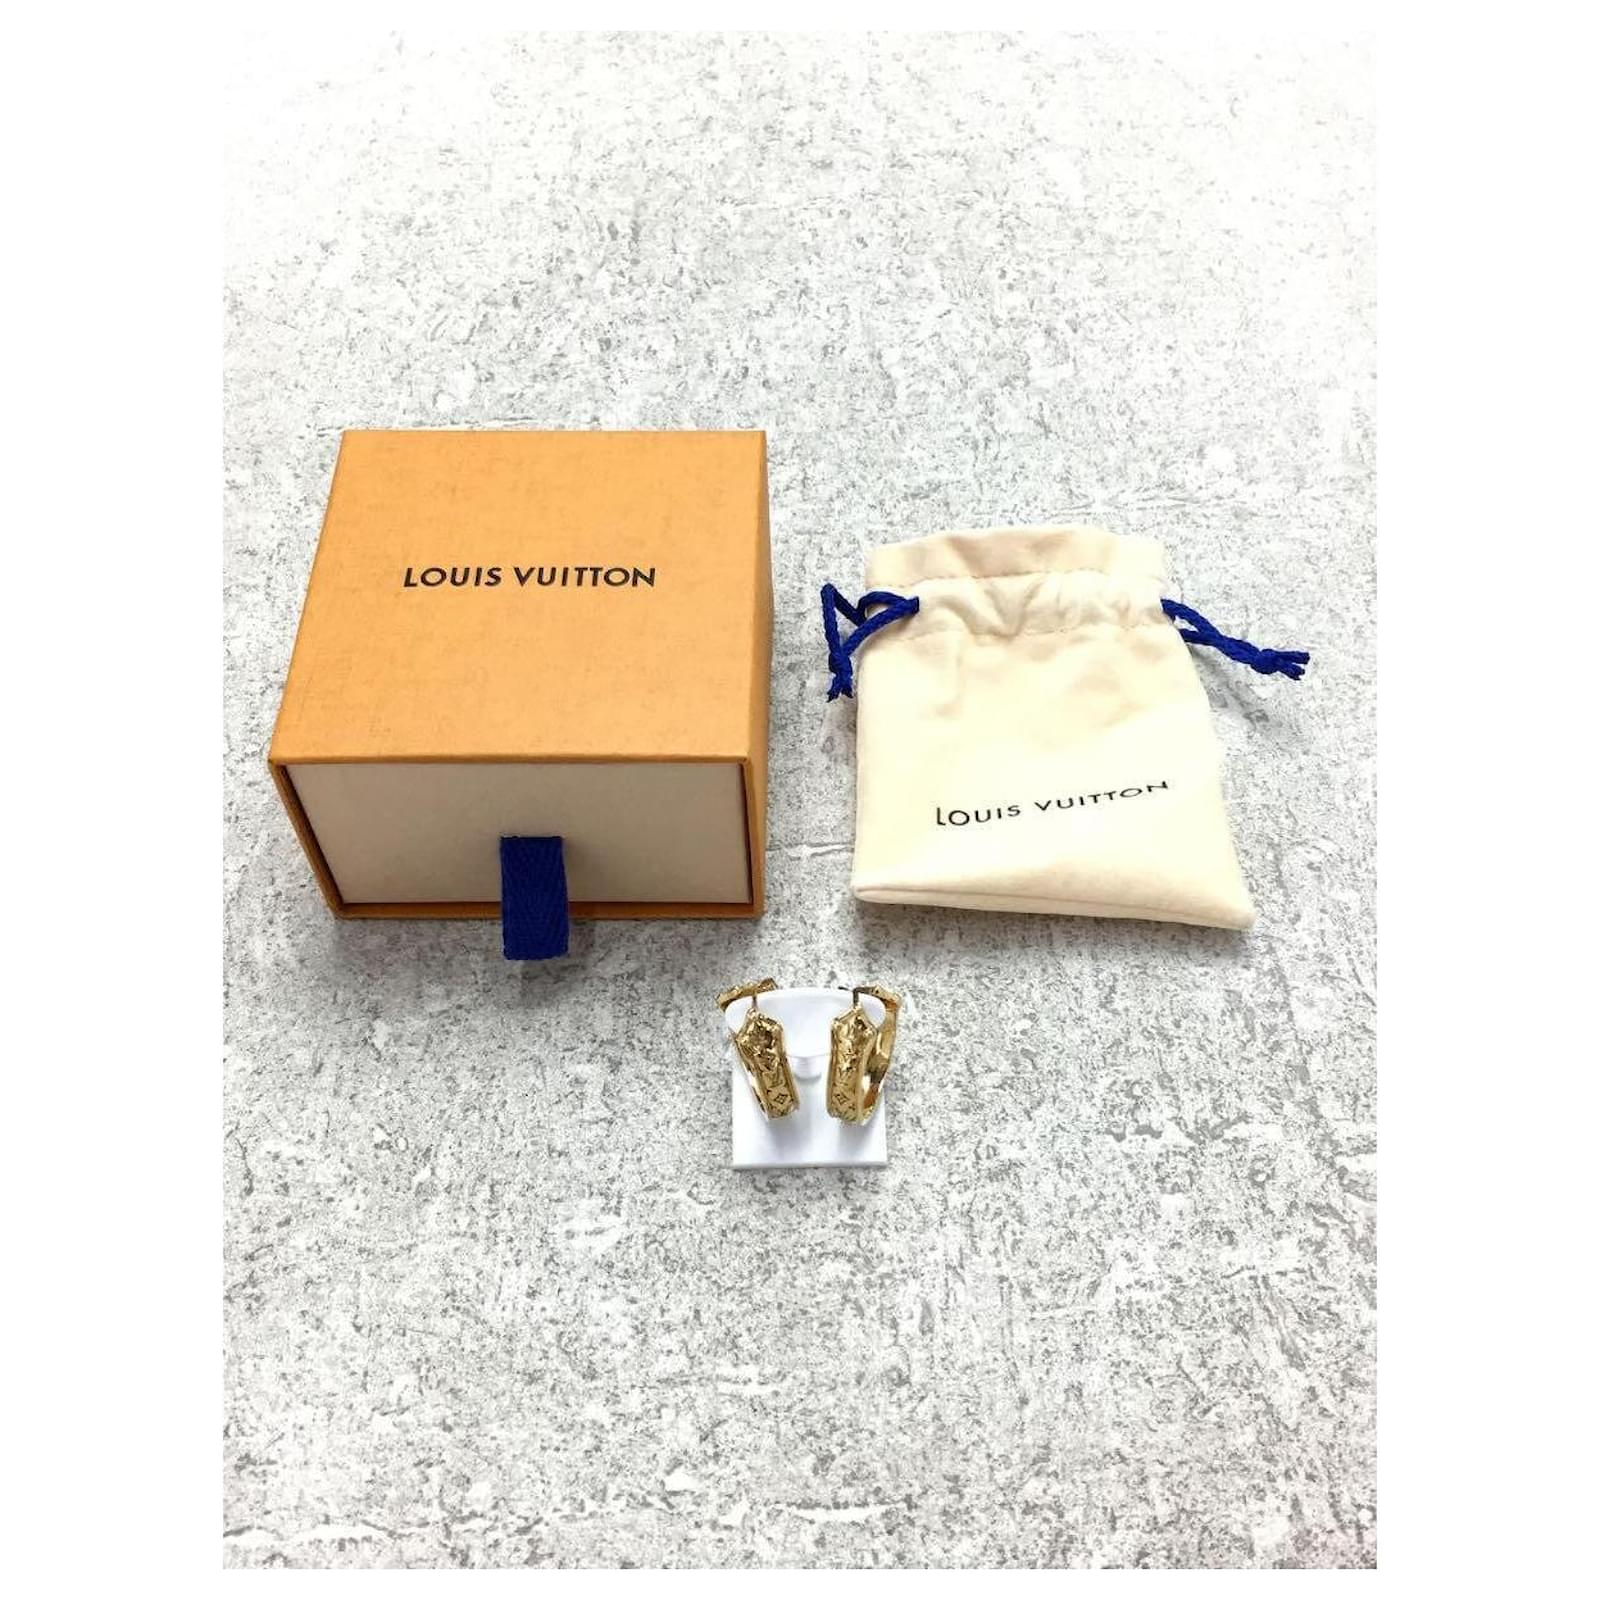 LOUIS VUITTON Earrings / Monogram Bookle / Dray Hoop / Nanogram